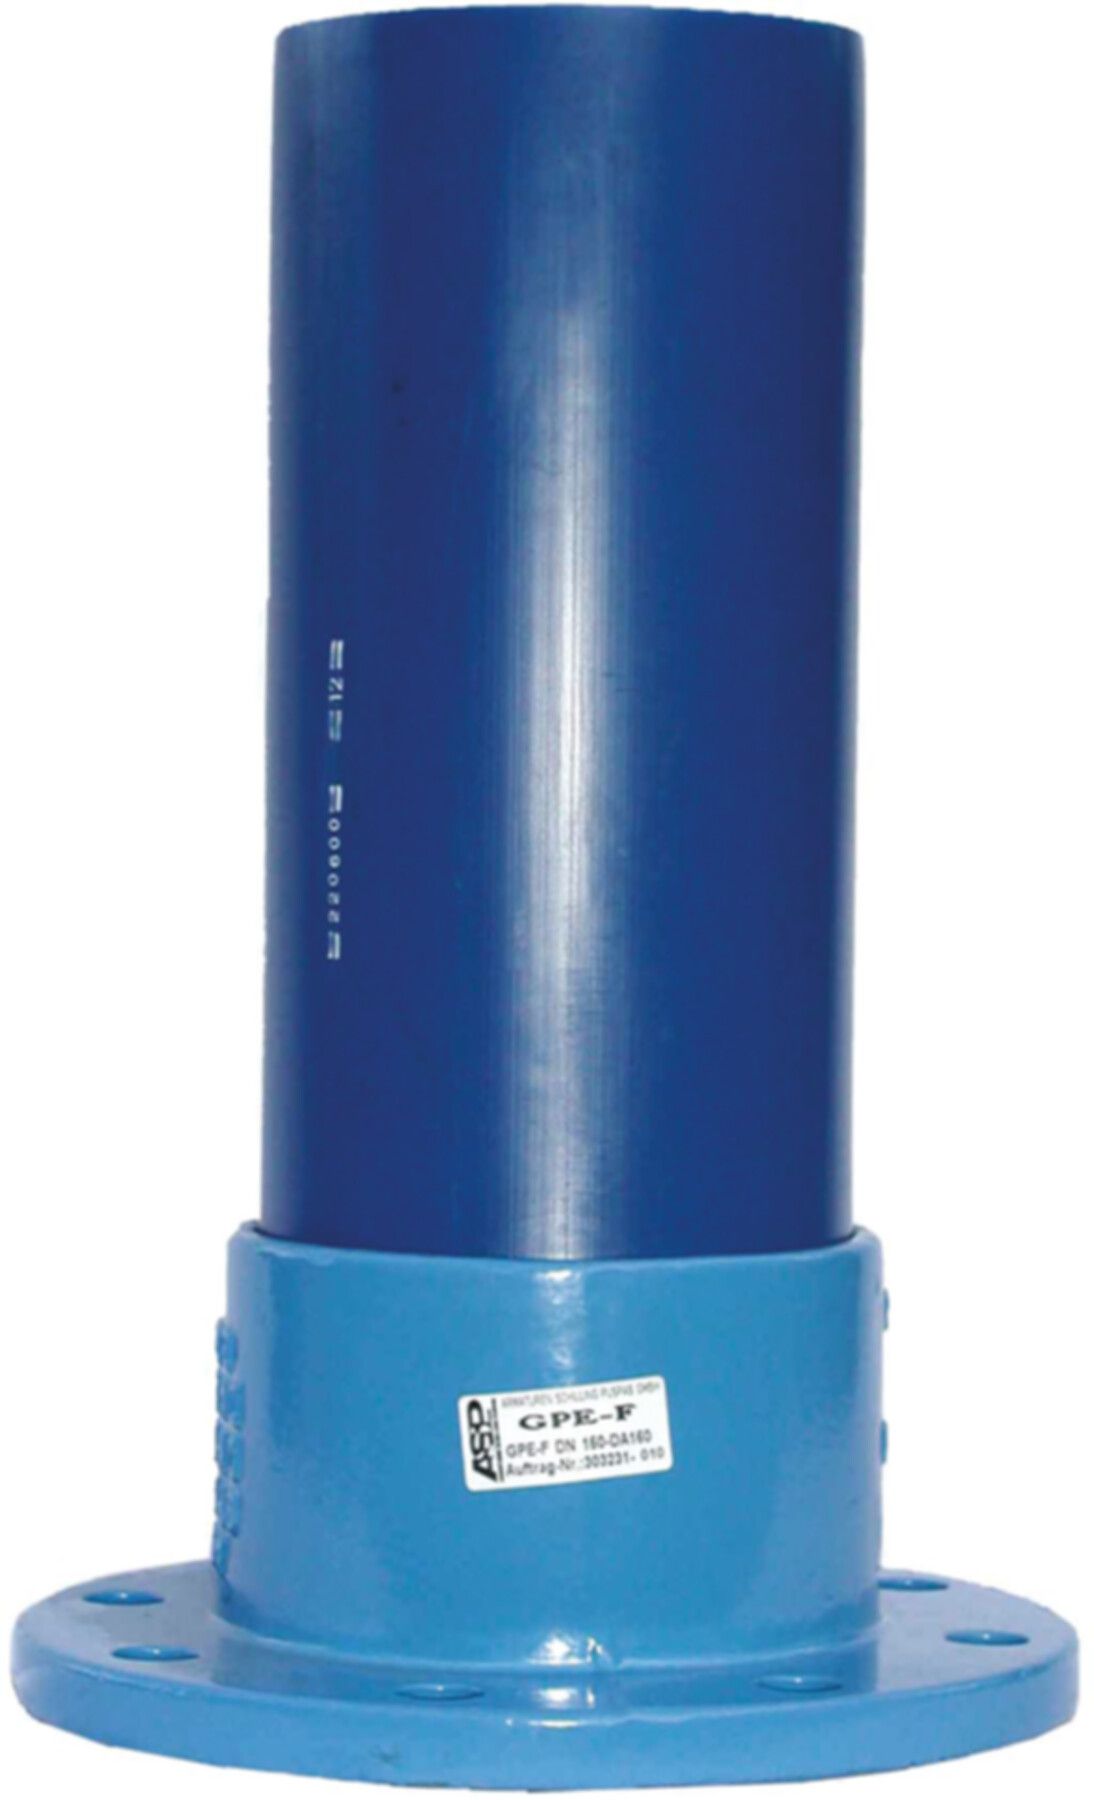 Übergangsstück Flansch-PE GPE PE100 S5 für Wasser PN 10/16 DN 150 / d 180mm - Frischhut Steckmuffenformstücke